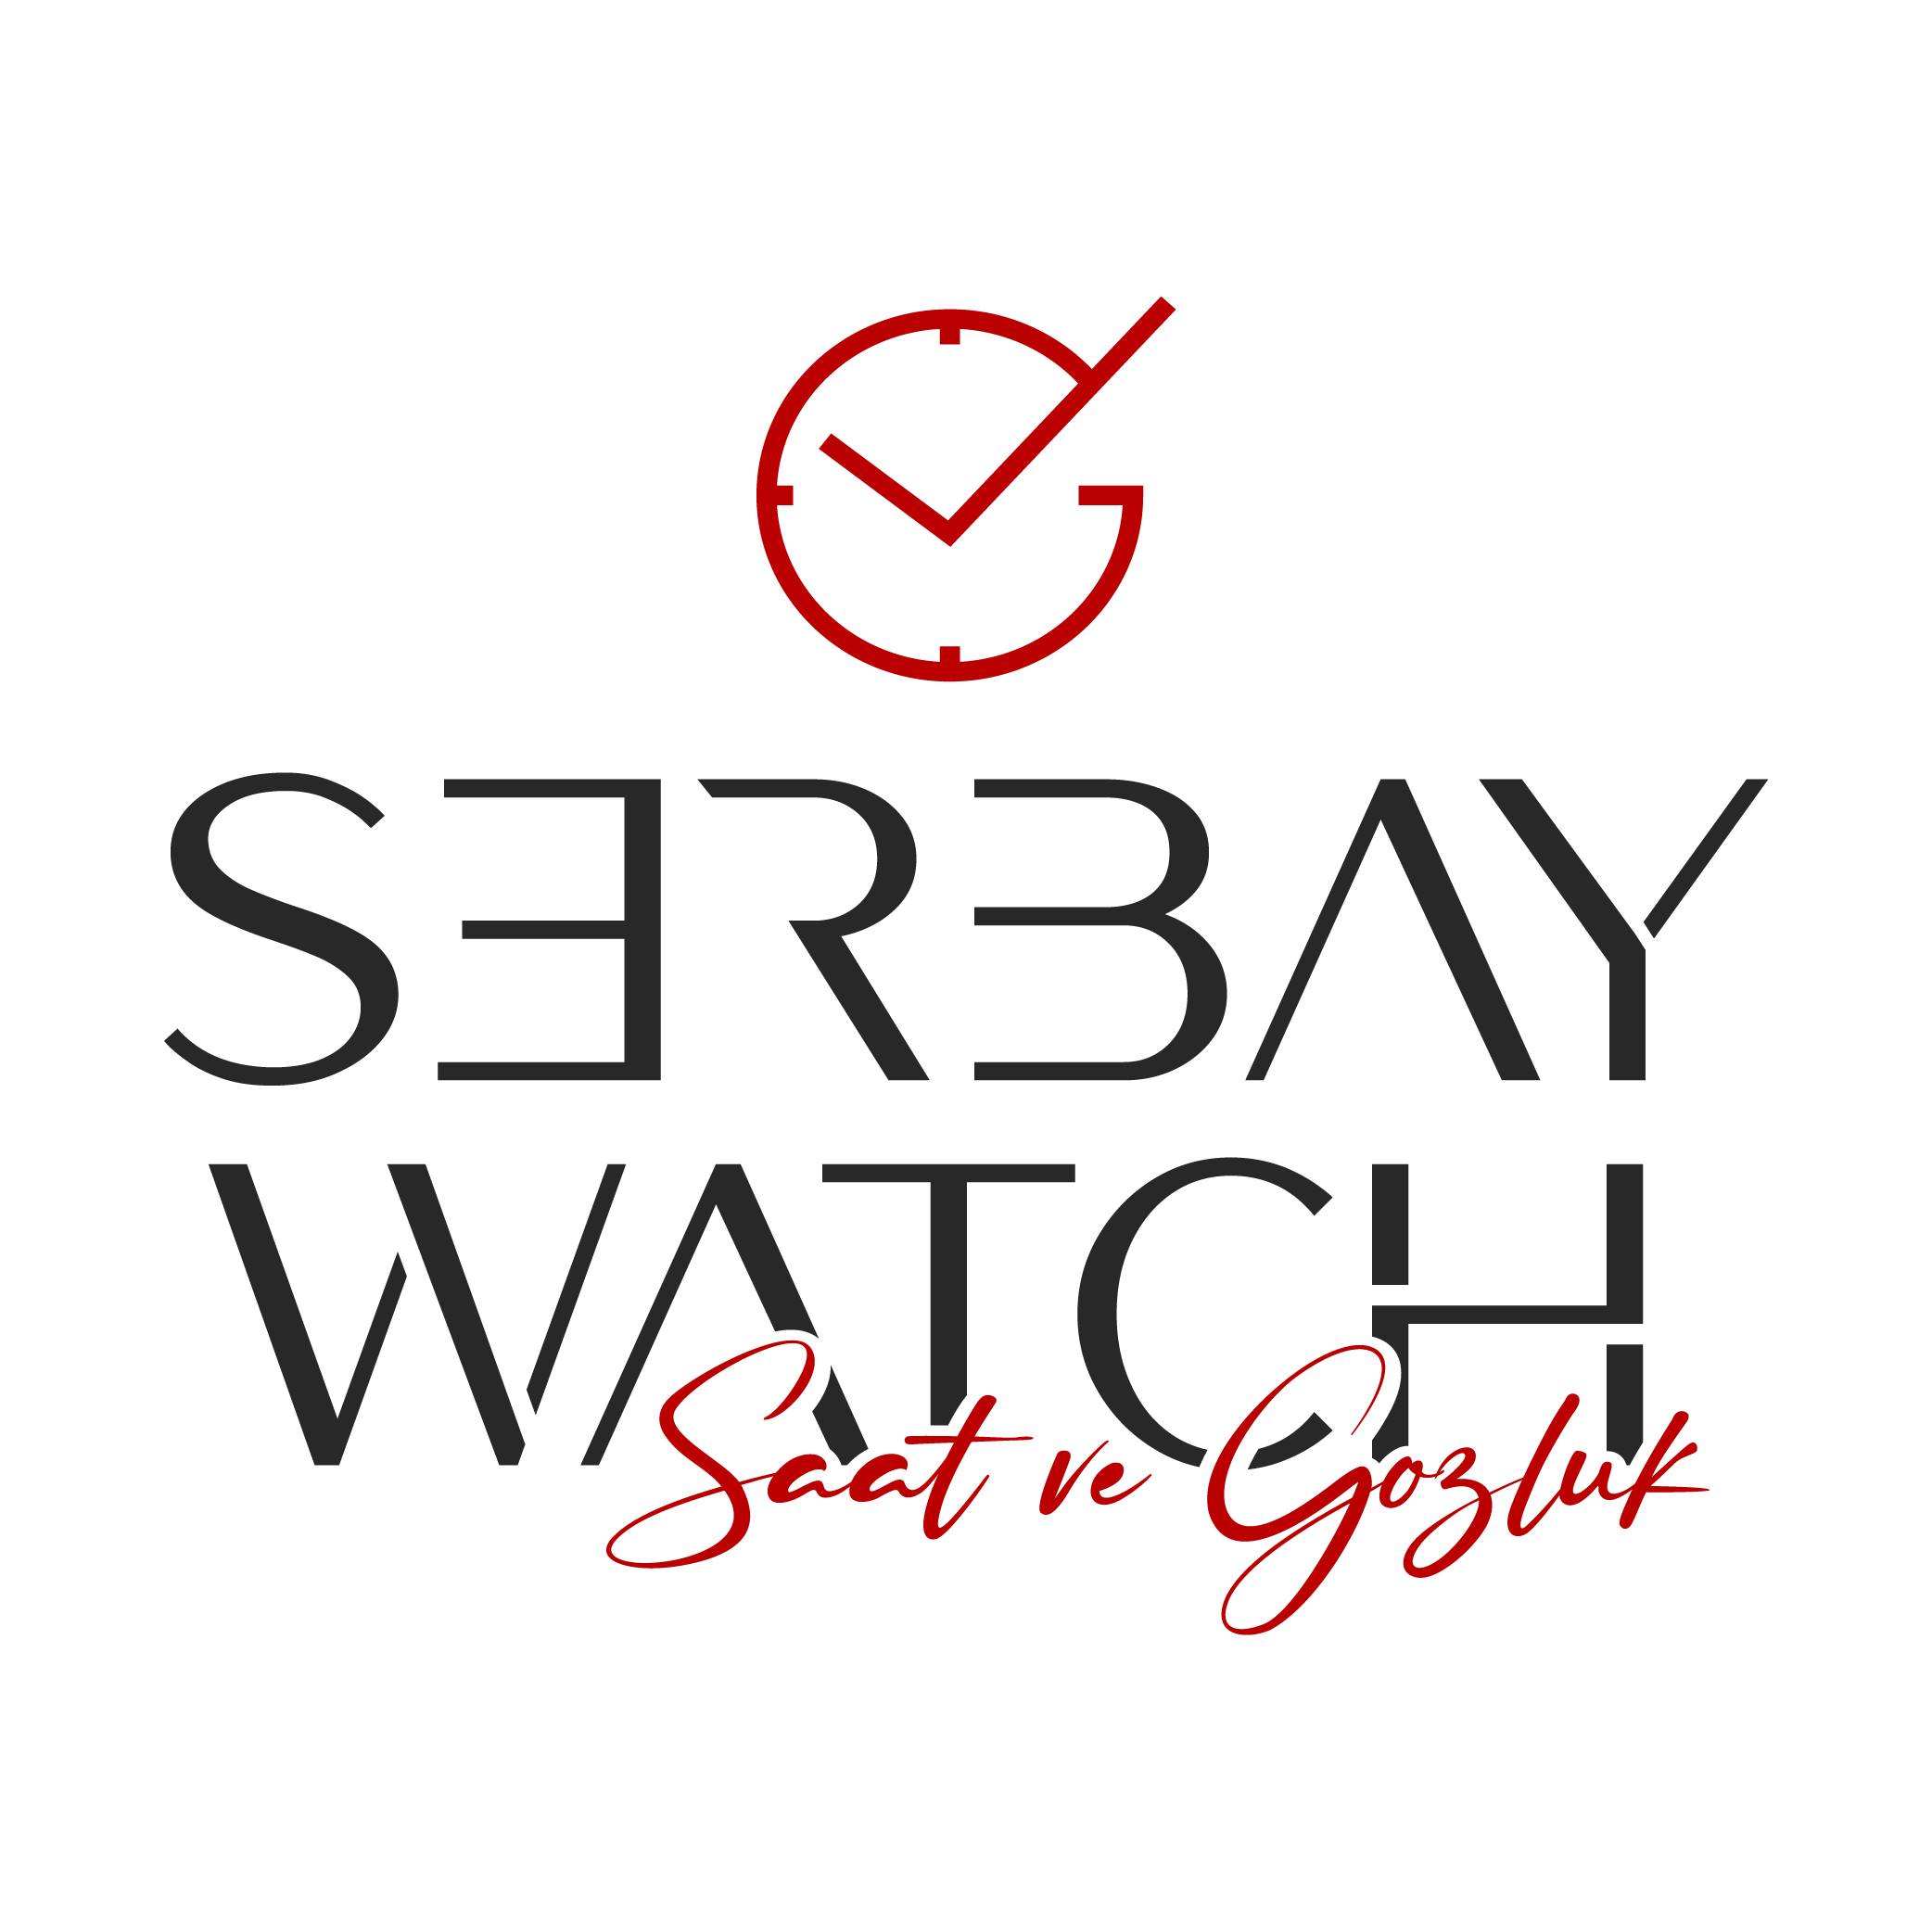 SerbayWatch